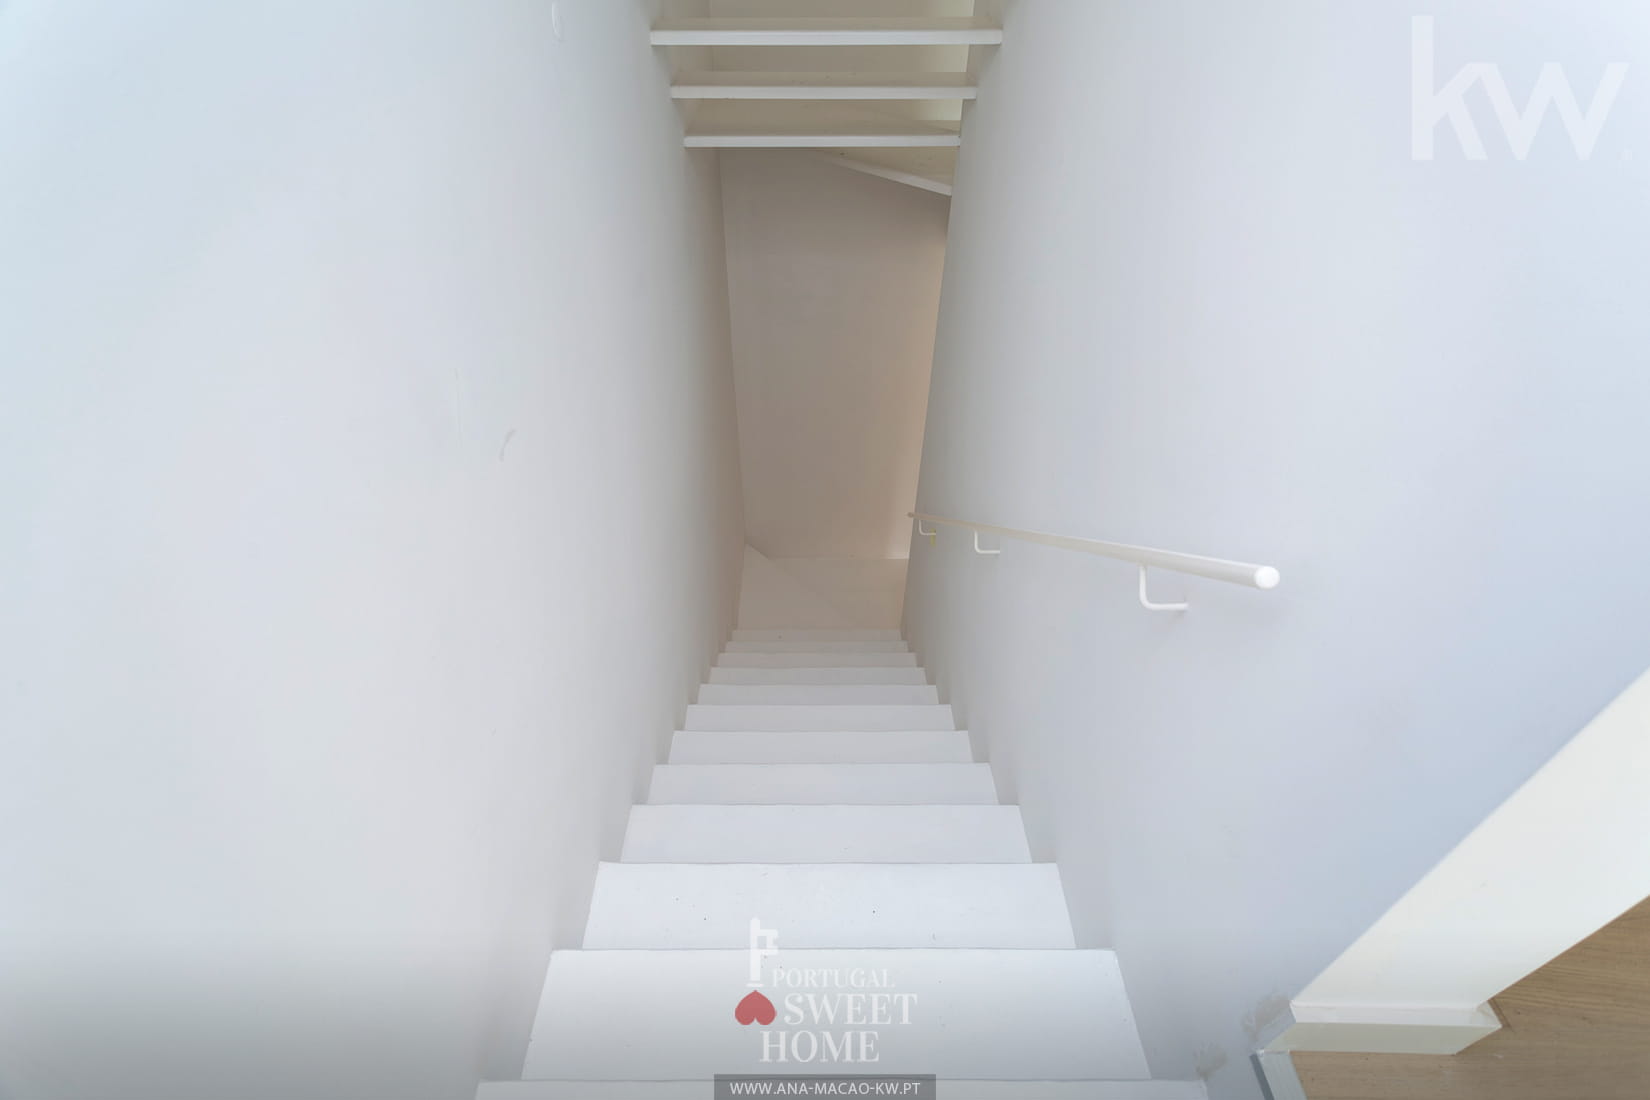 Escadaria de acesso ao piso inferior